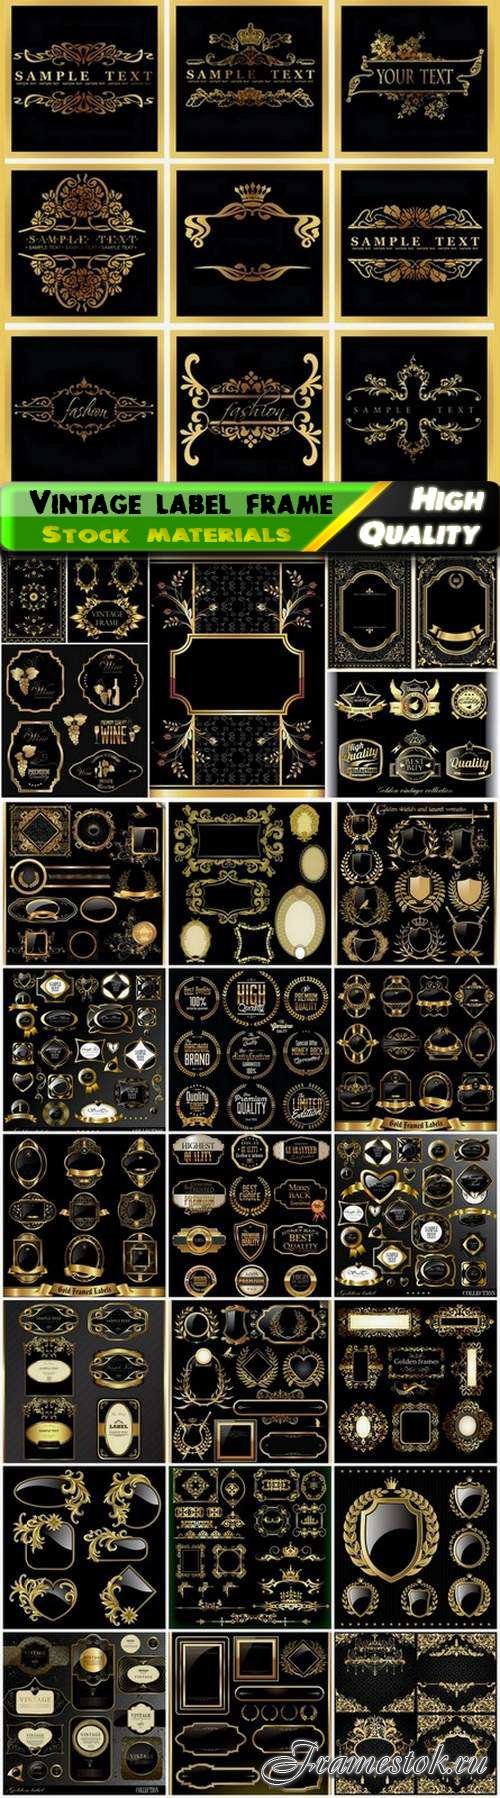 Vintage label frame and calligraphic decorative gold elements - 25 Eps